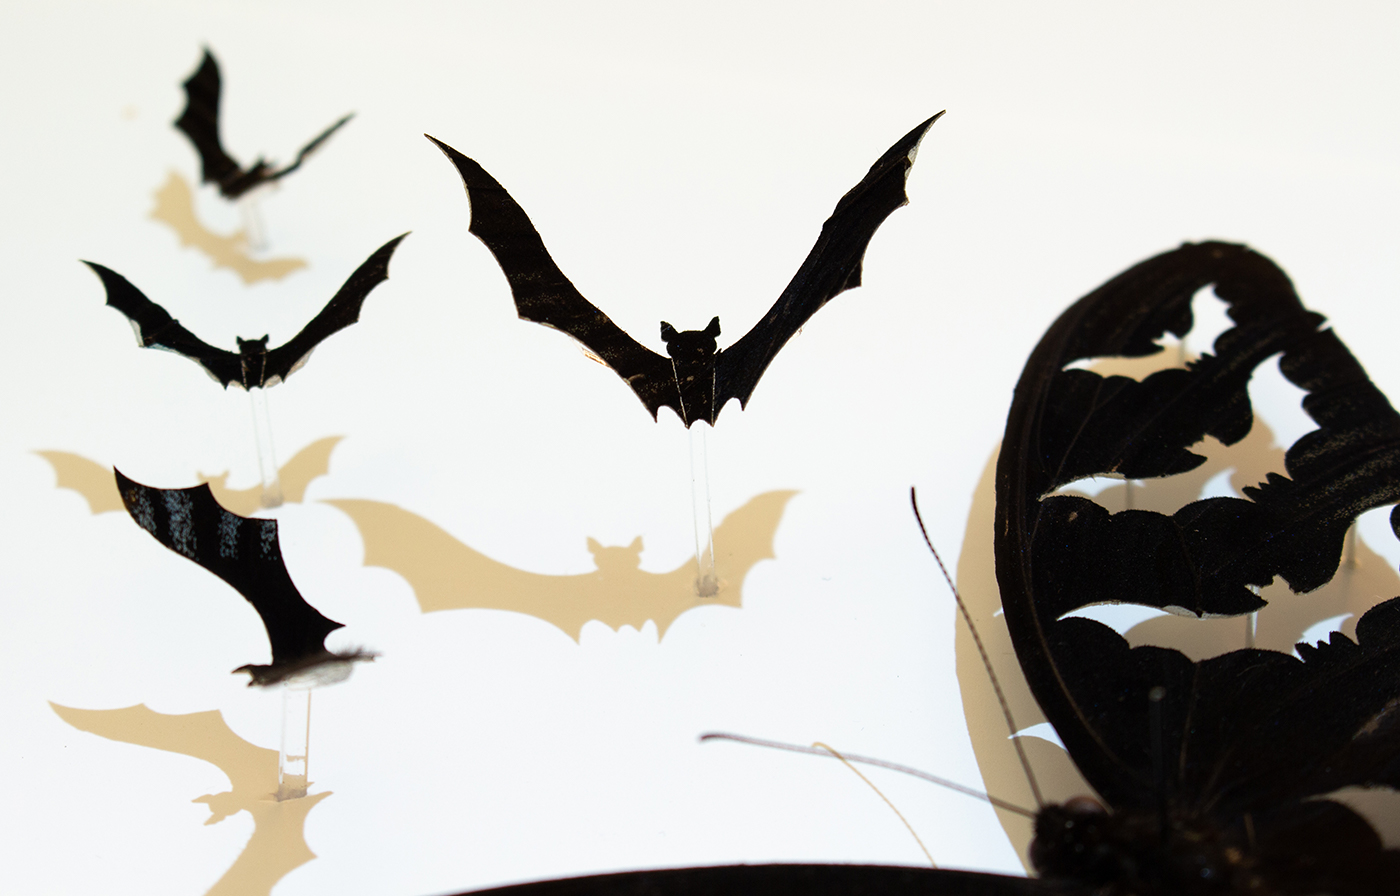 Metamorphosis taxidermy artwork, closeup image of bats